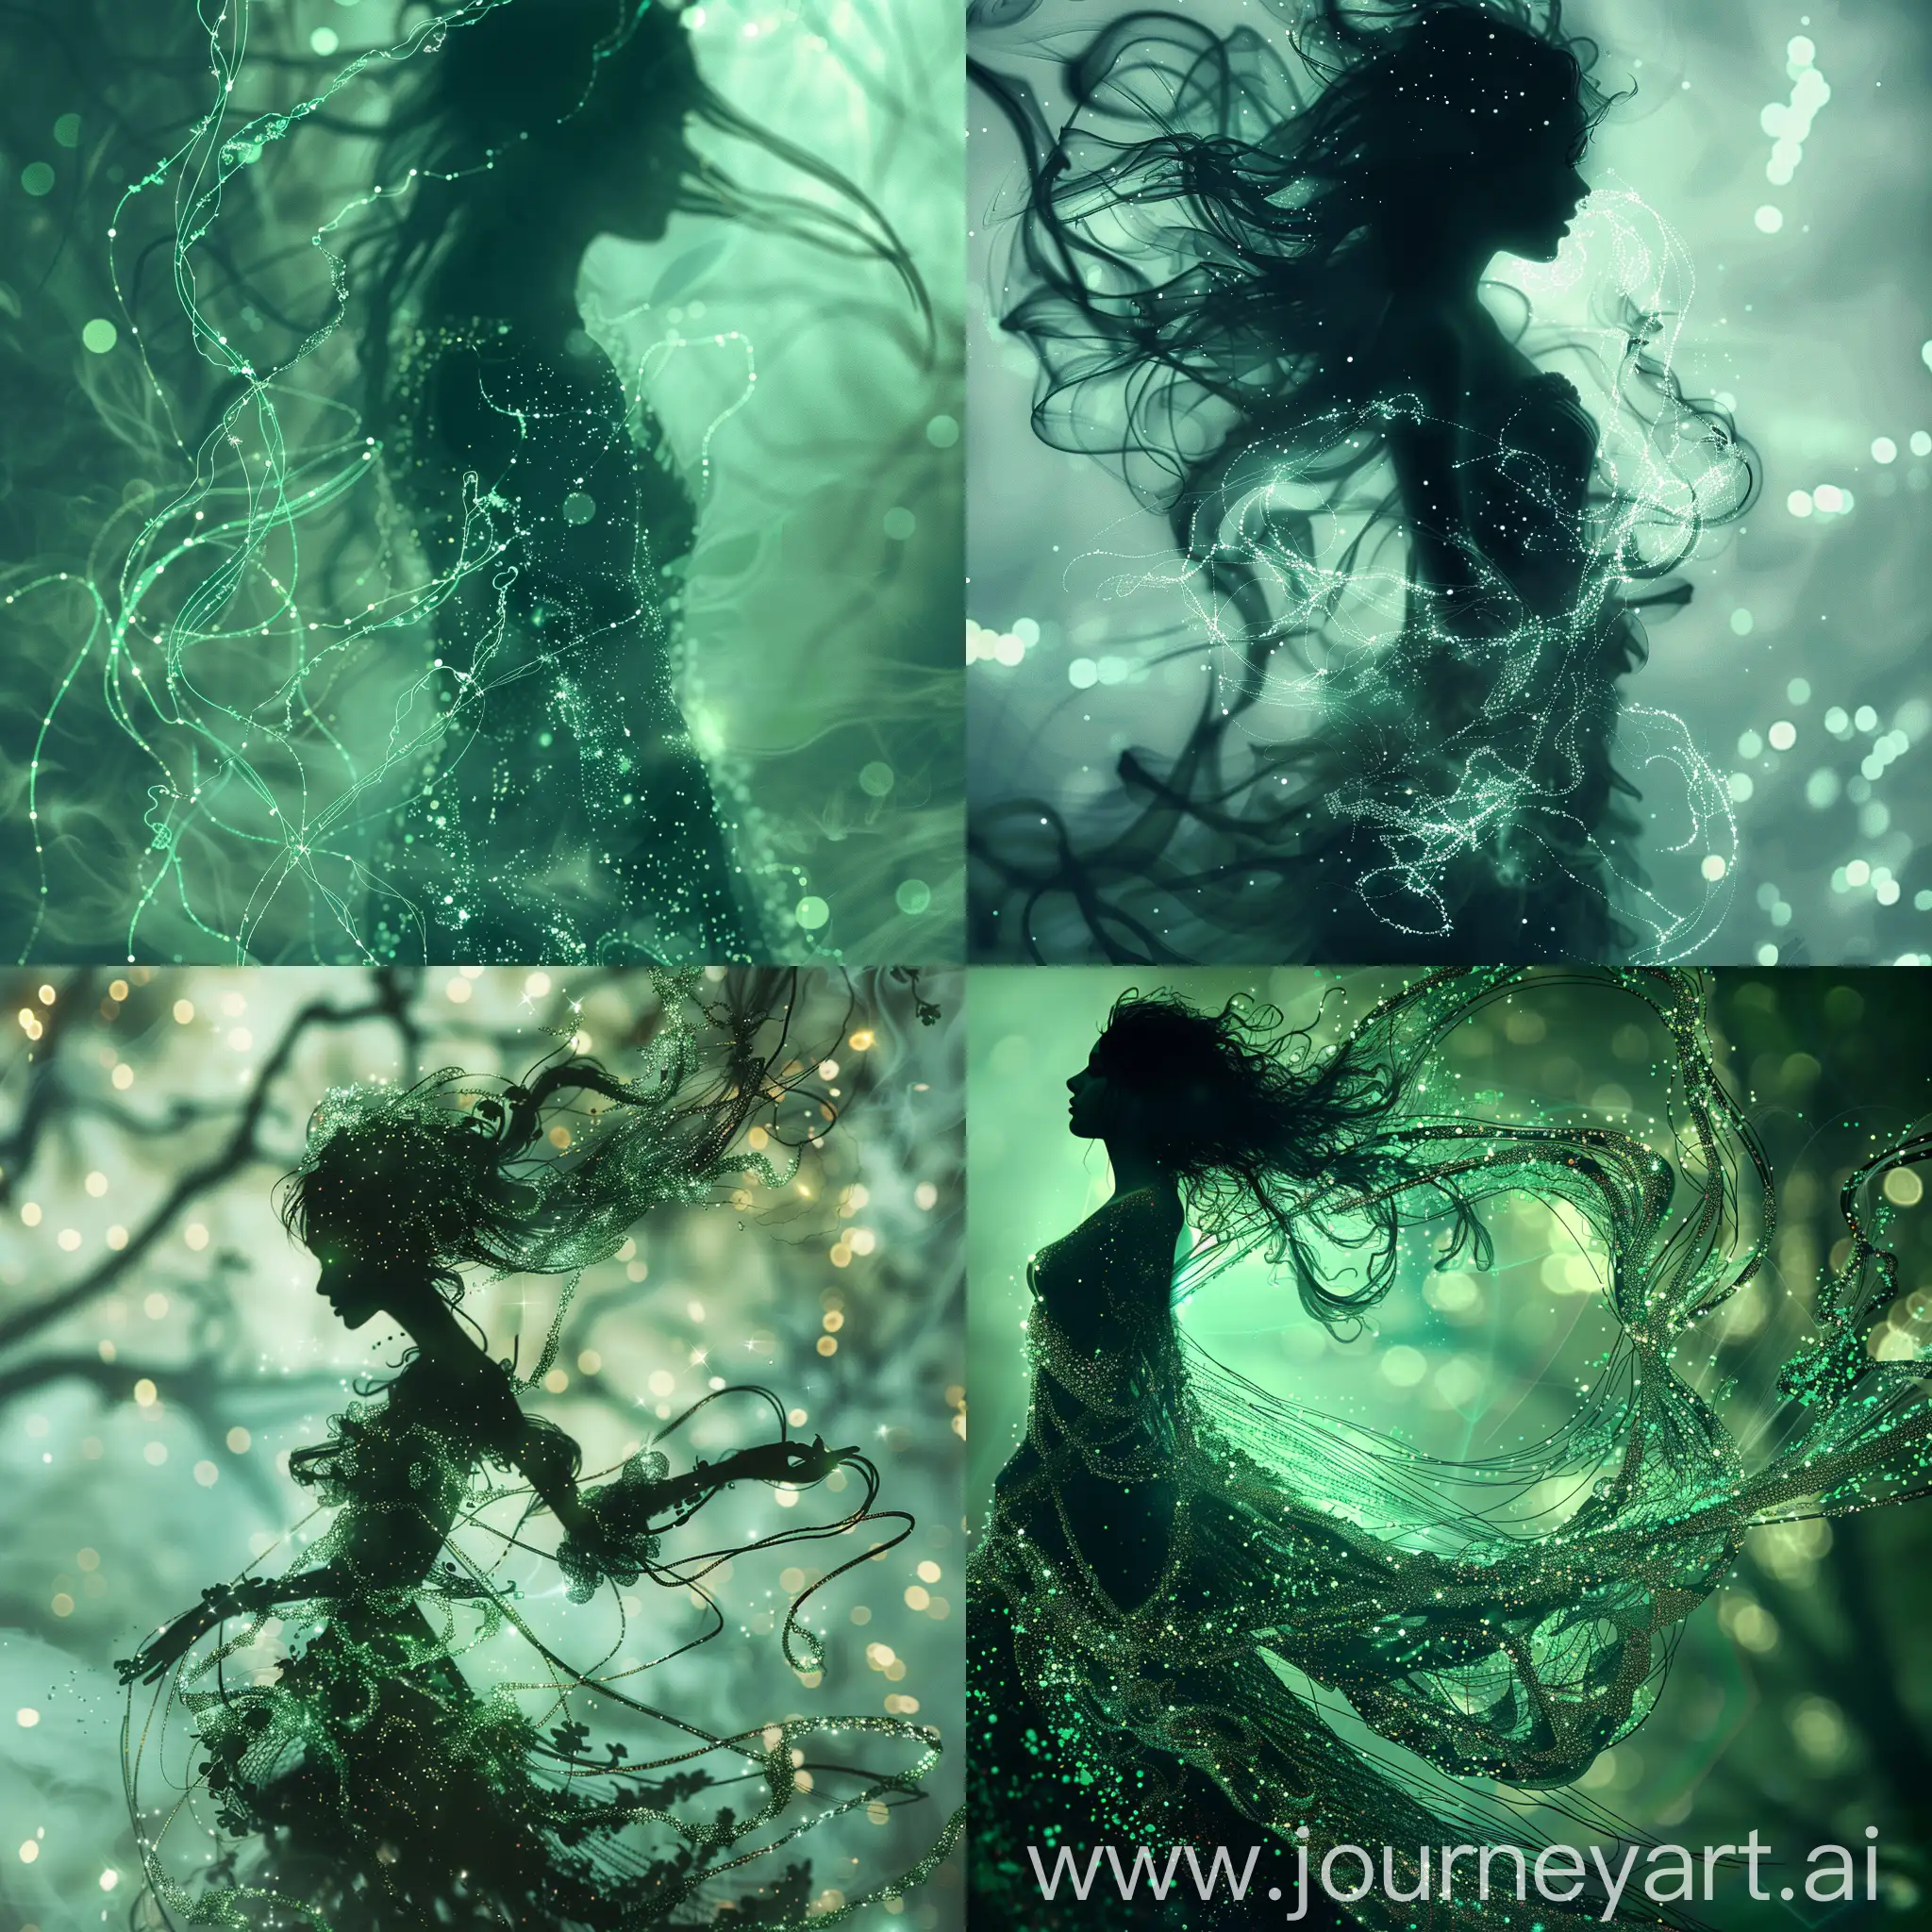 Ethereal-Fusion-Glowing-Girl-in-Botanical-Body-Art